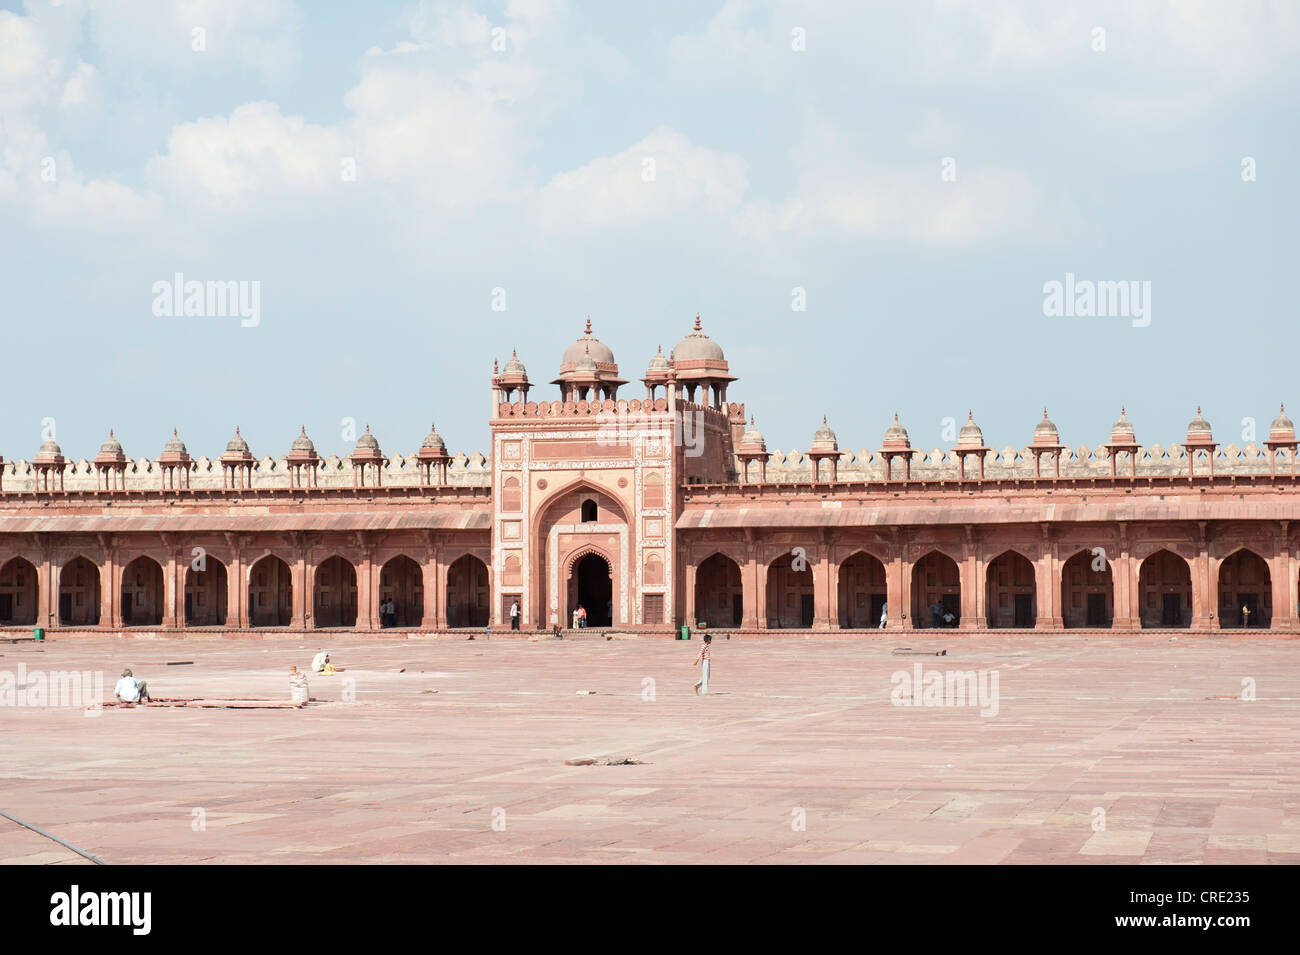 Mosquée, Iwan et gateway, la Mosquée Jama Masjid, Fatehpur Sikri, Uttar Pradesh, Inde, Asie du Sud, Asie Banque D'Images